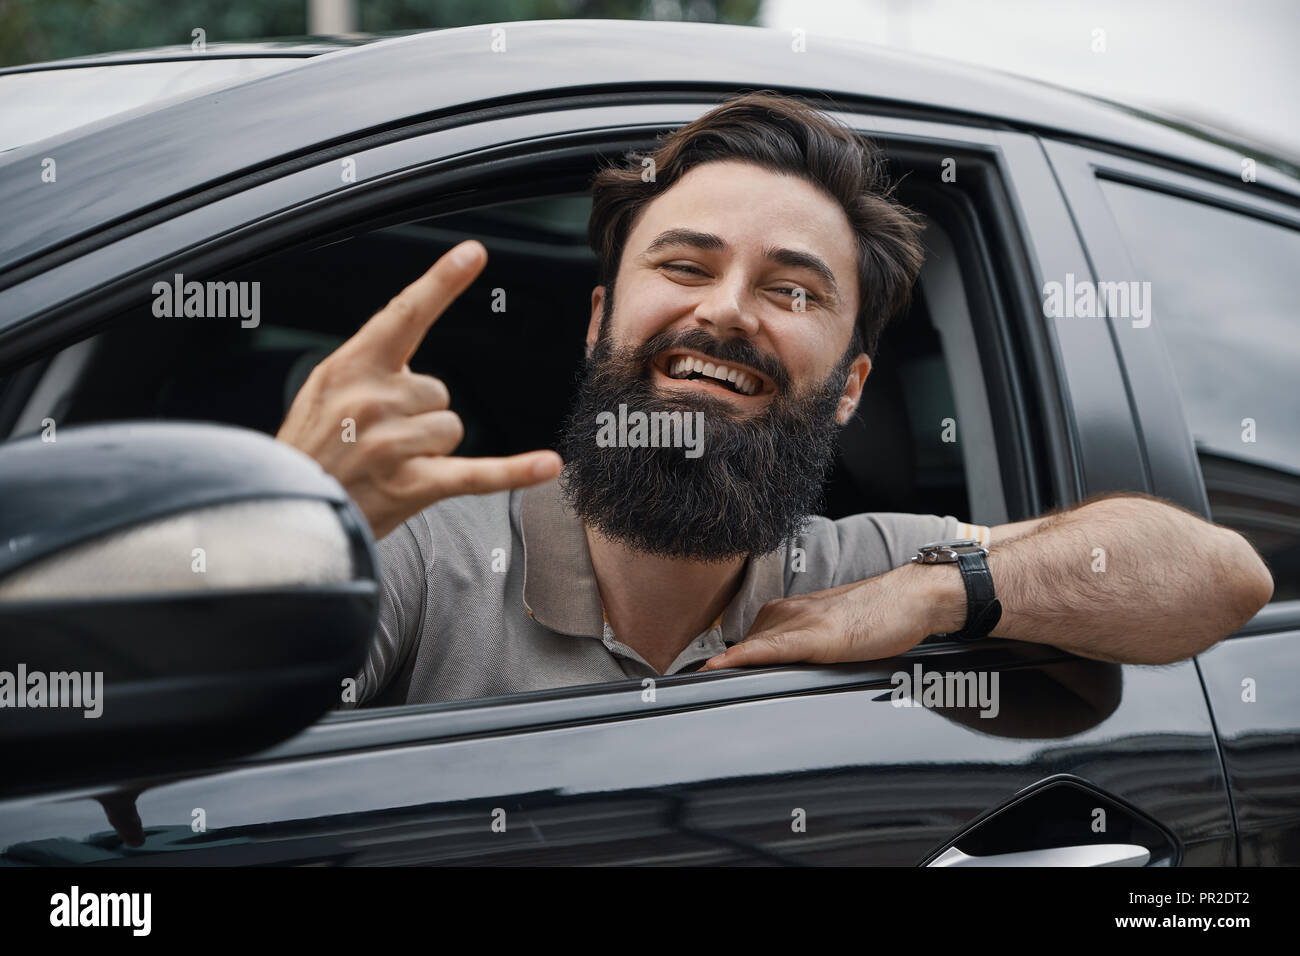 Man Happy To Drive His New City Car Cheerful Car Driver Making